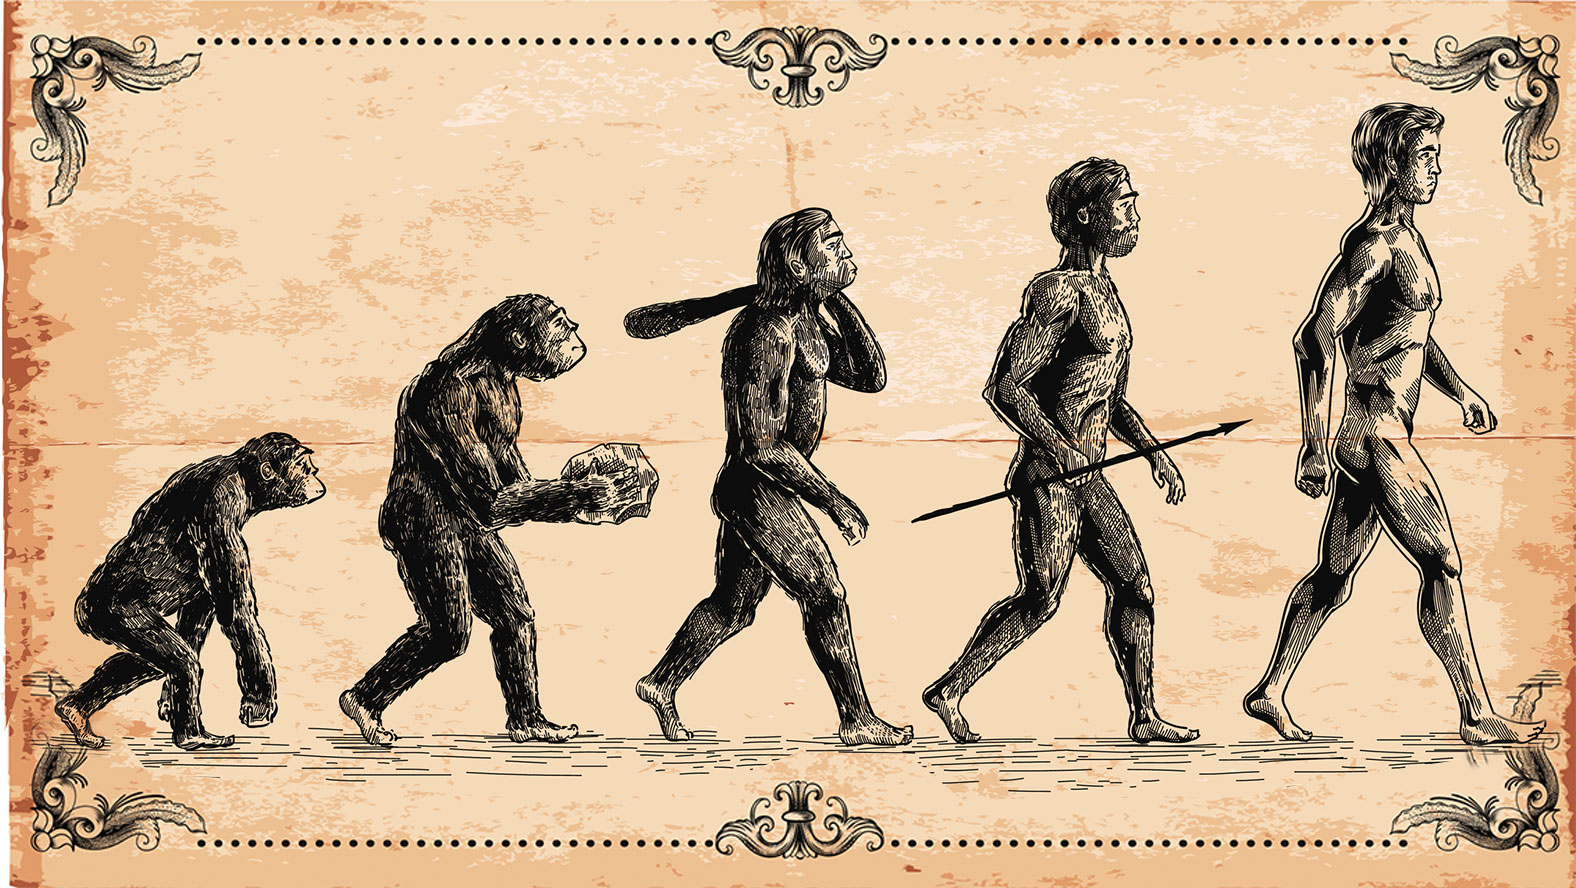 Evolutionary Mismatch - Implications for the Modern World